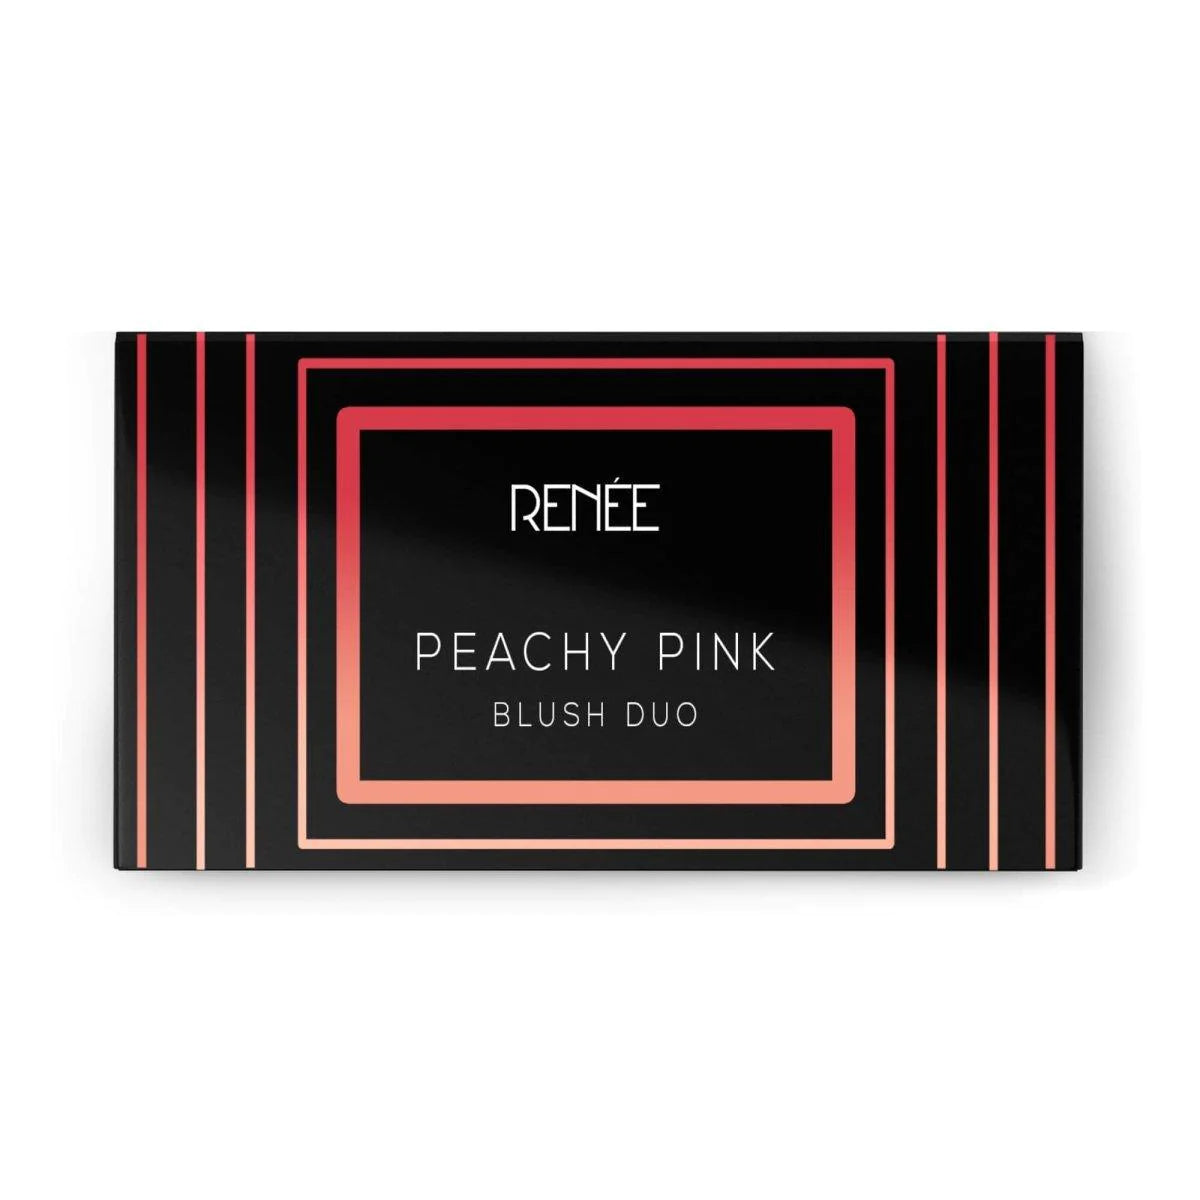 Renee Peachy Pink Blush Duo